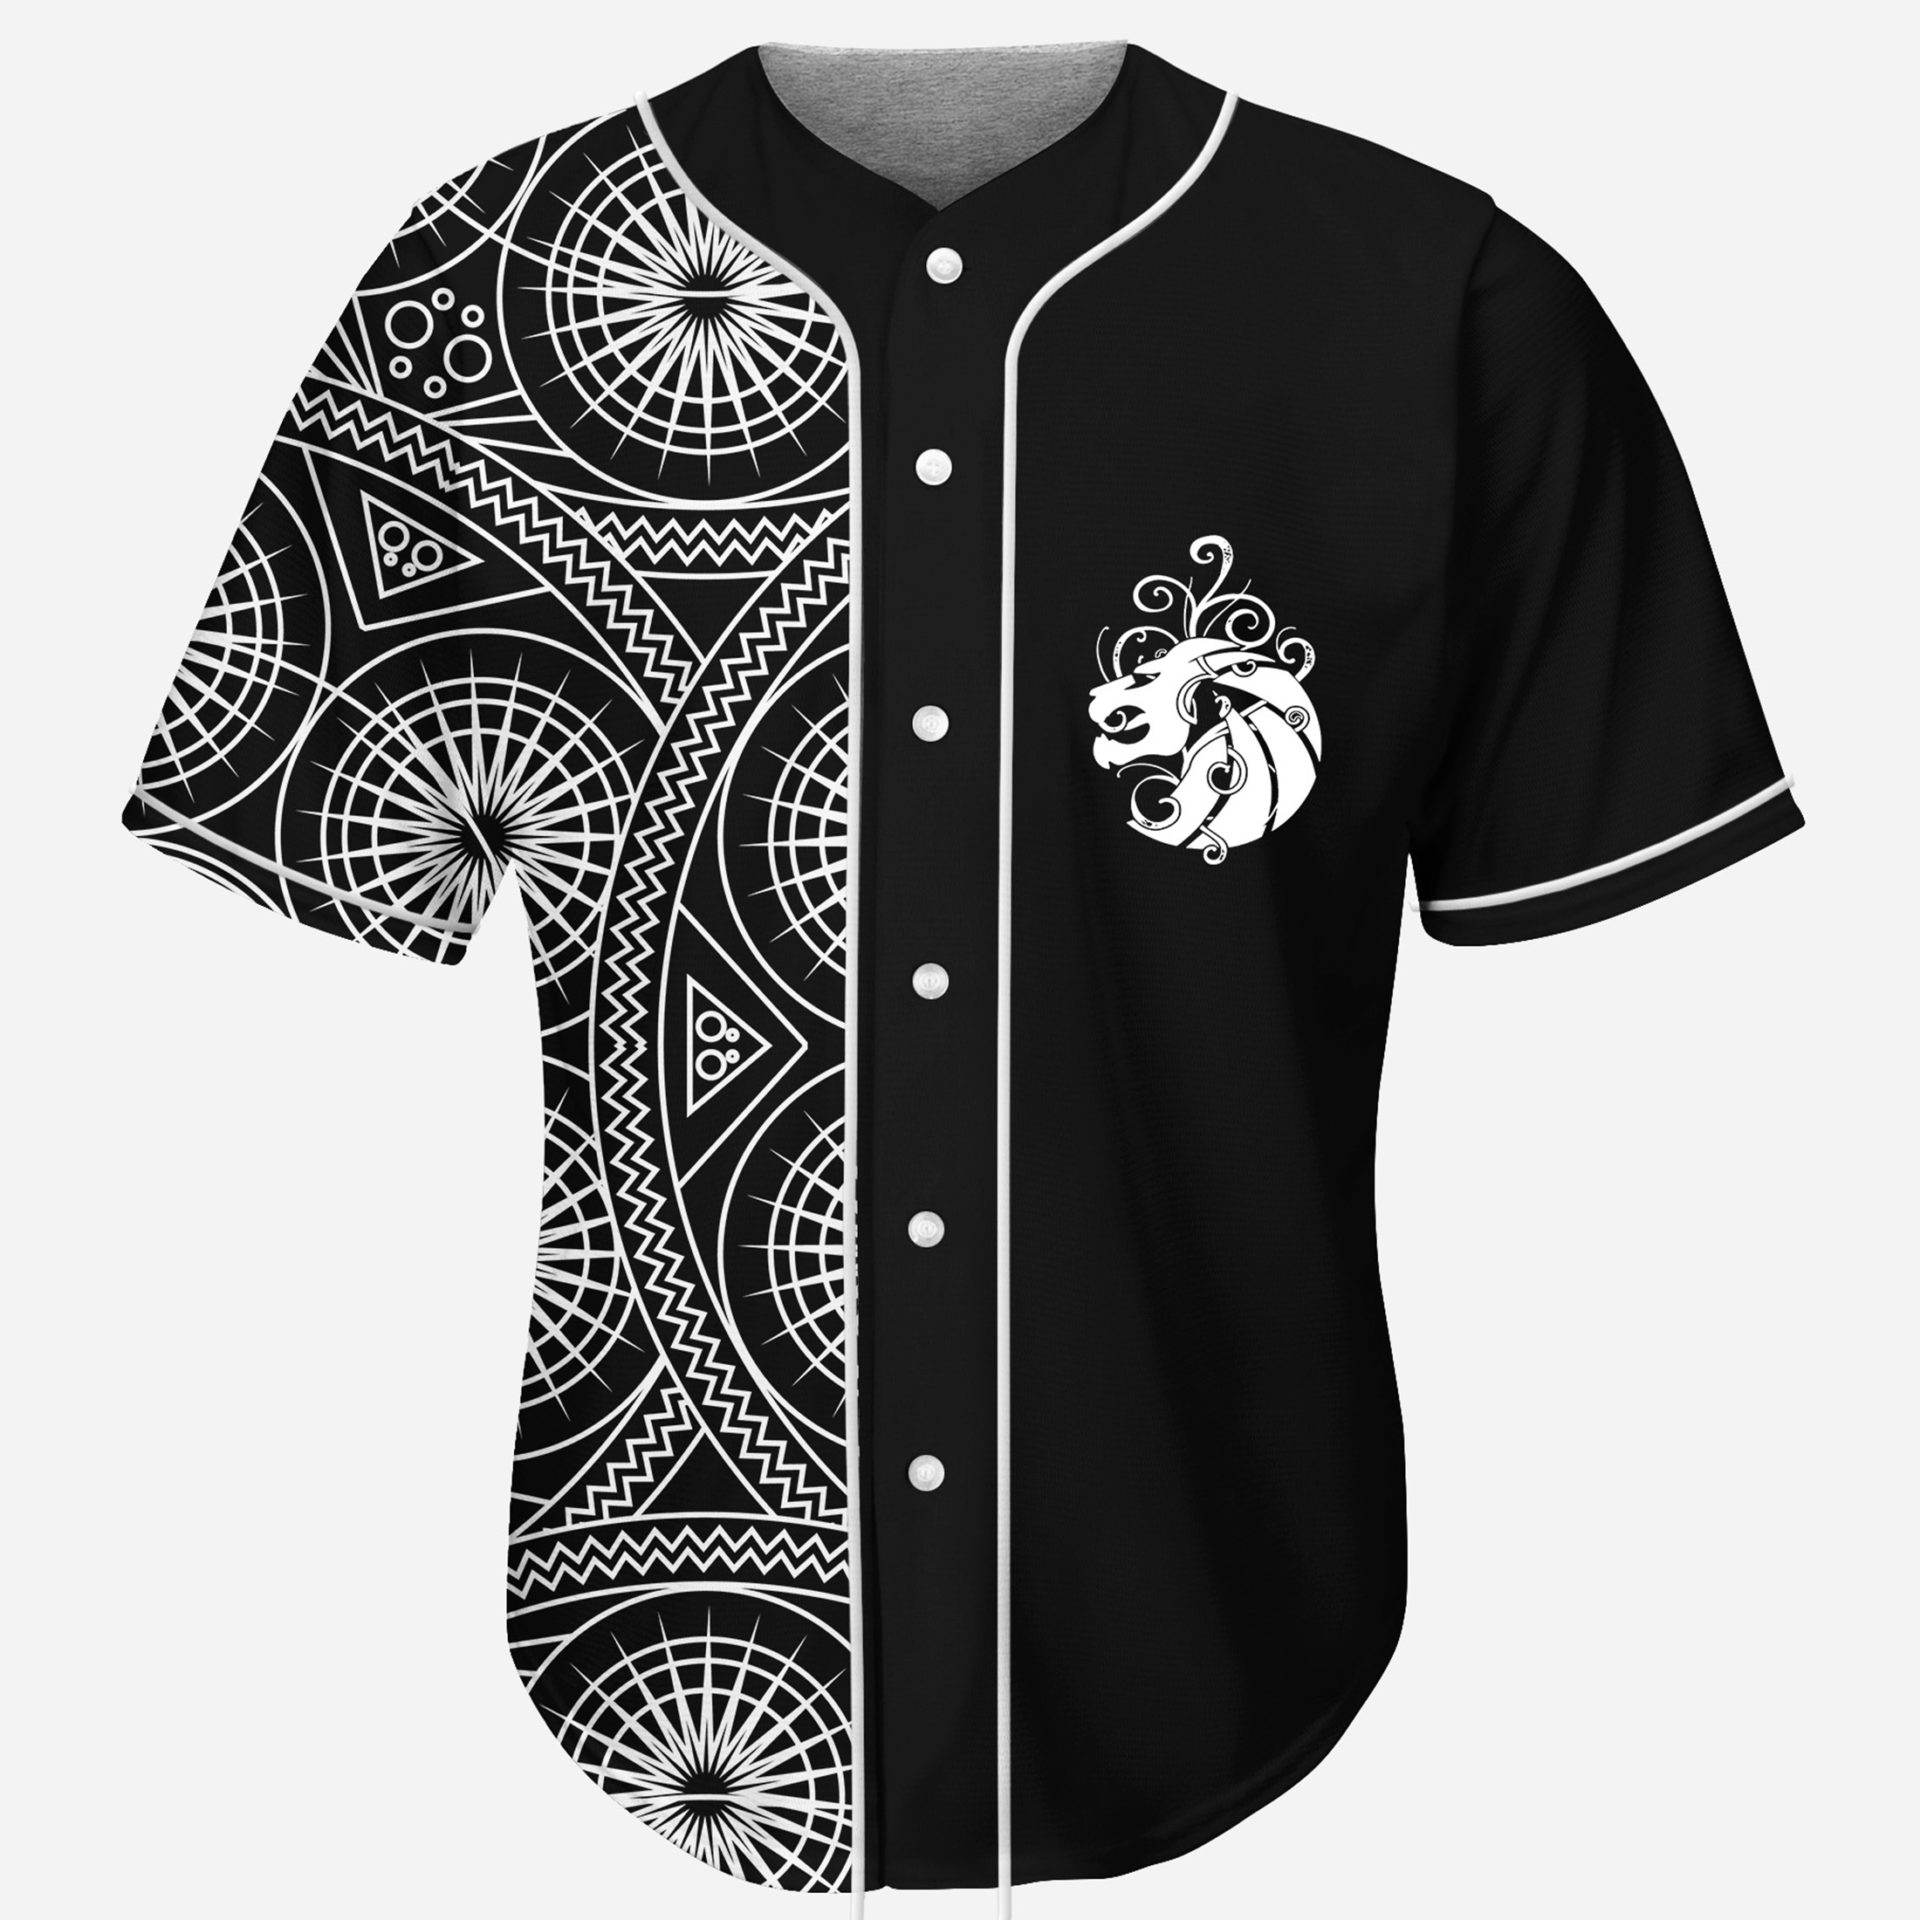 Excision geometric split cool design rave baseball jersey for EDM festivals